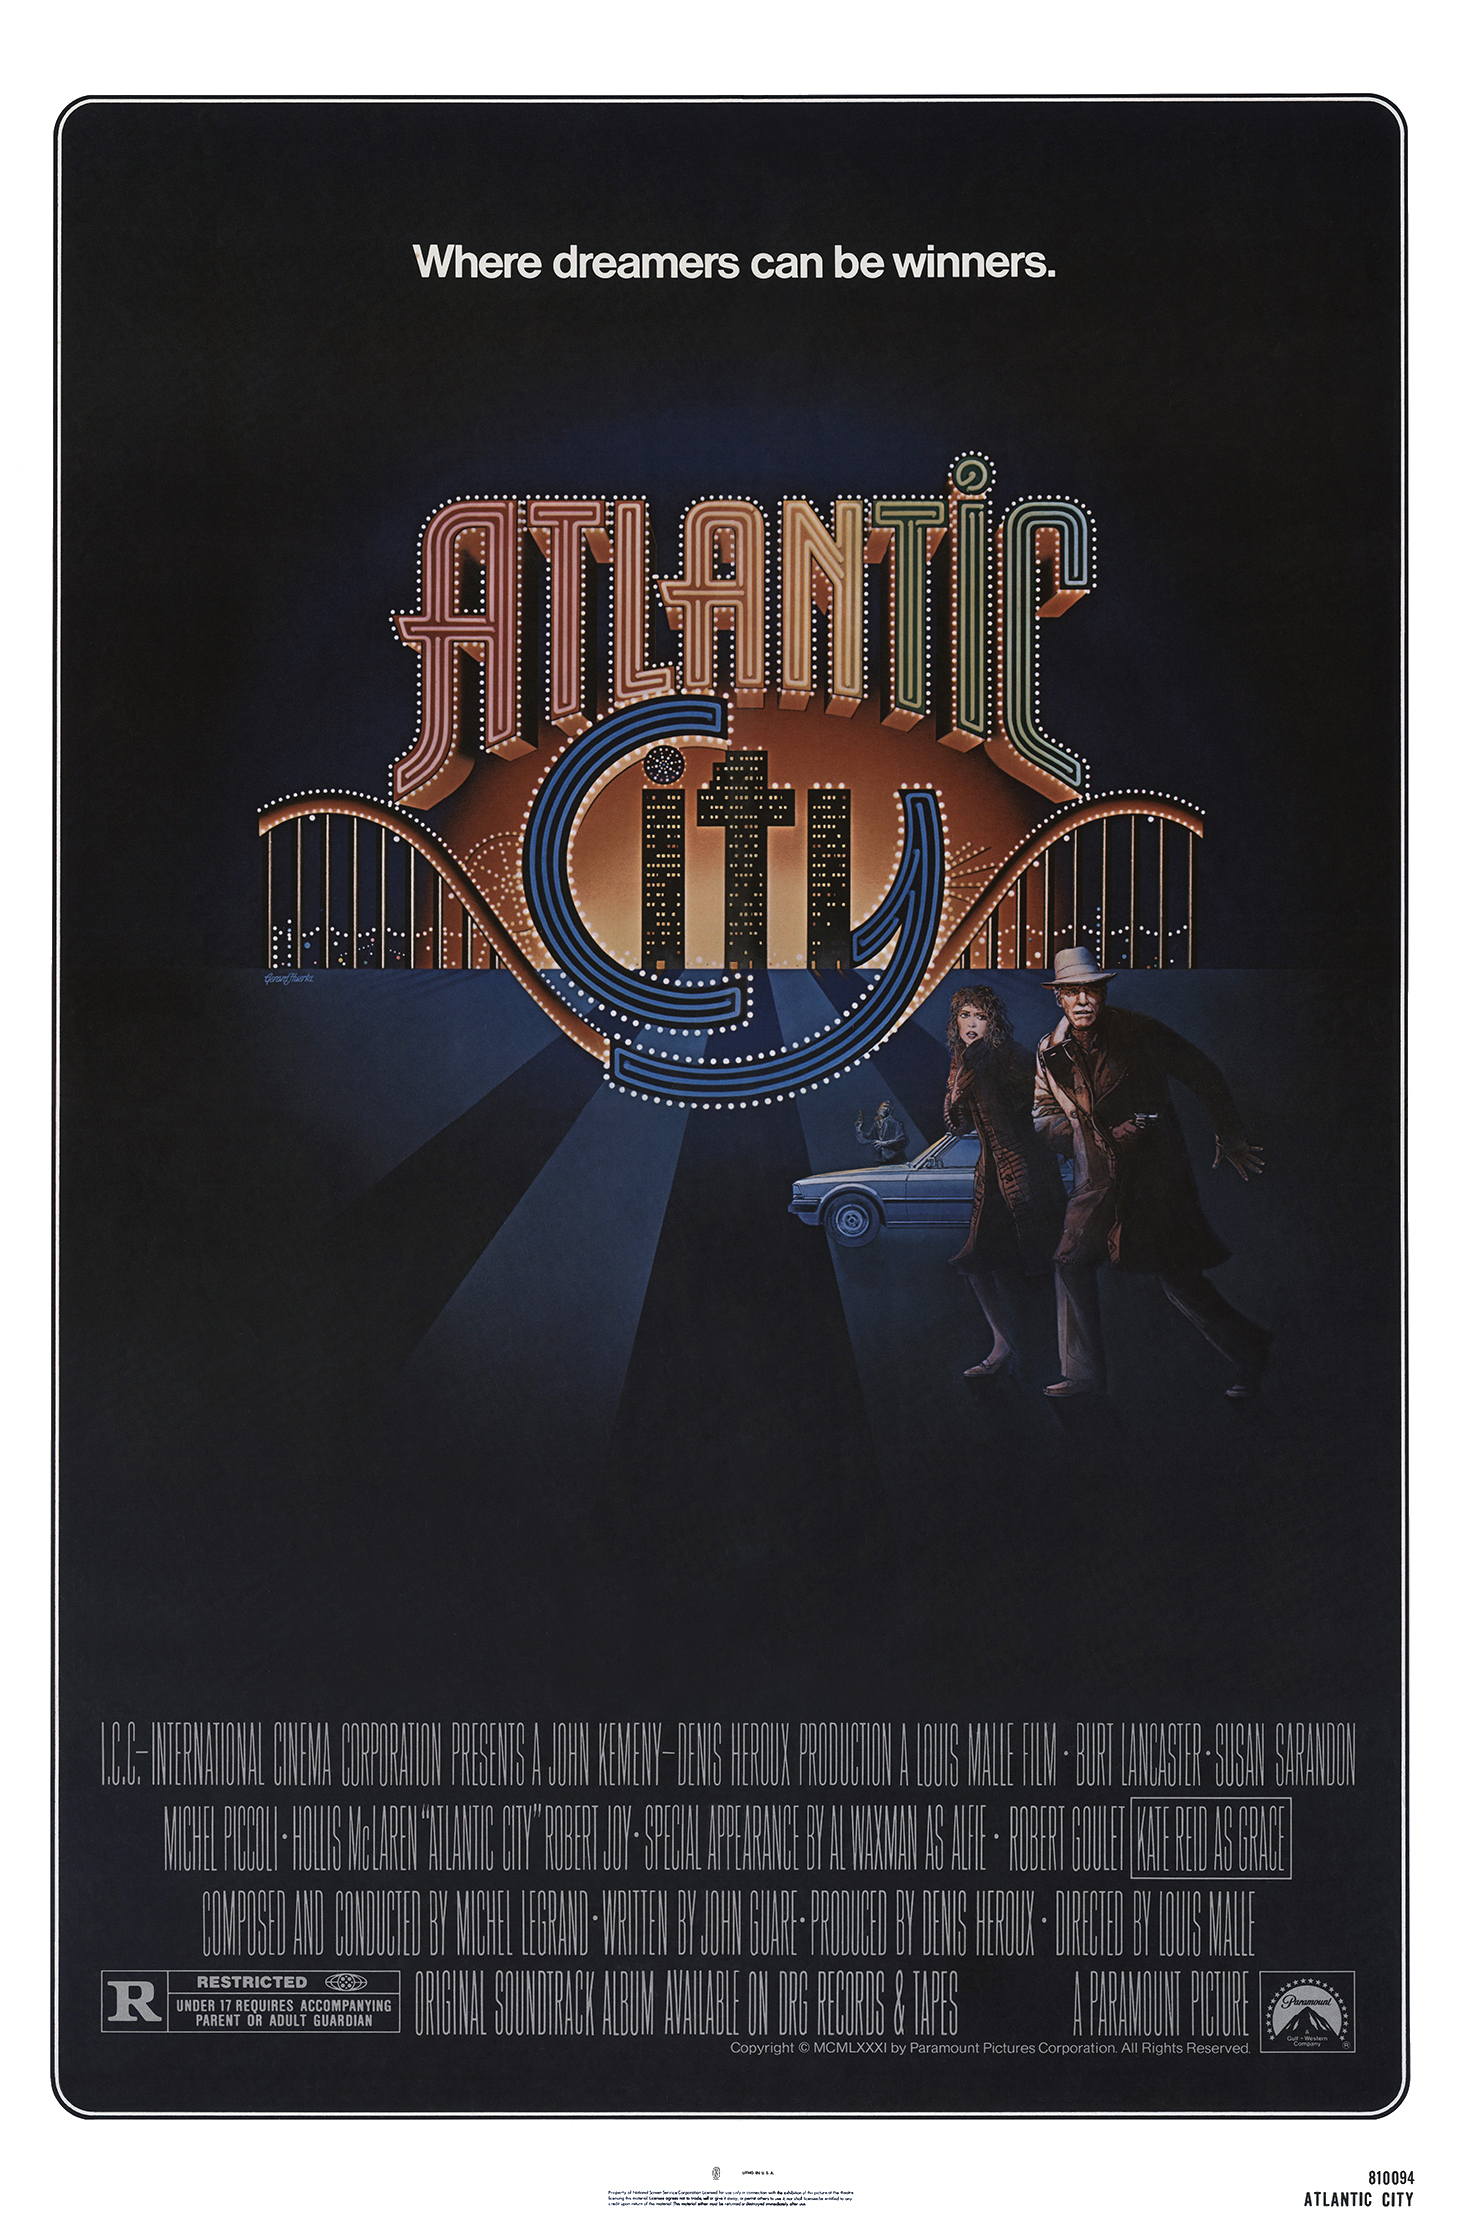 Atlantic City (1981)